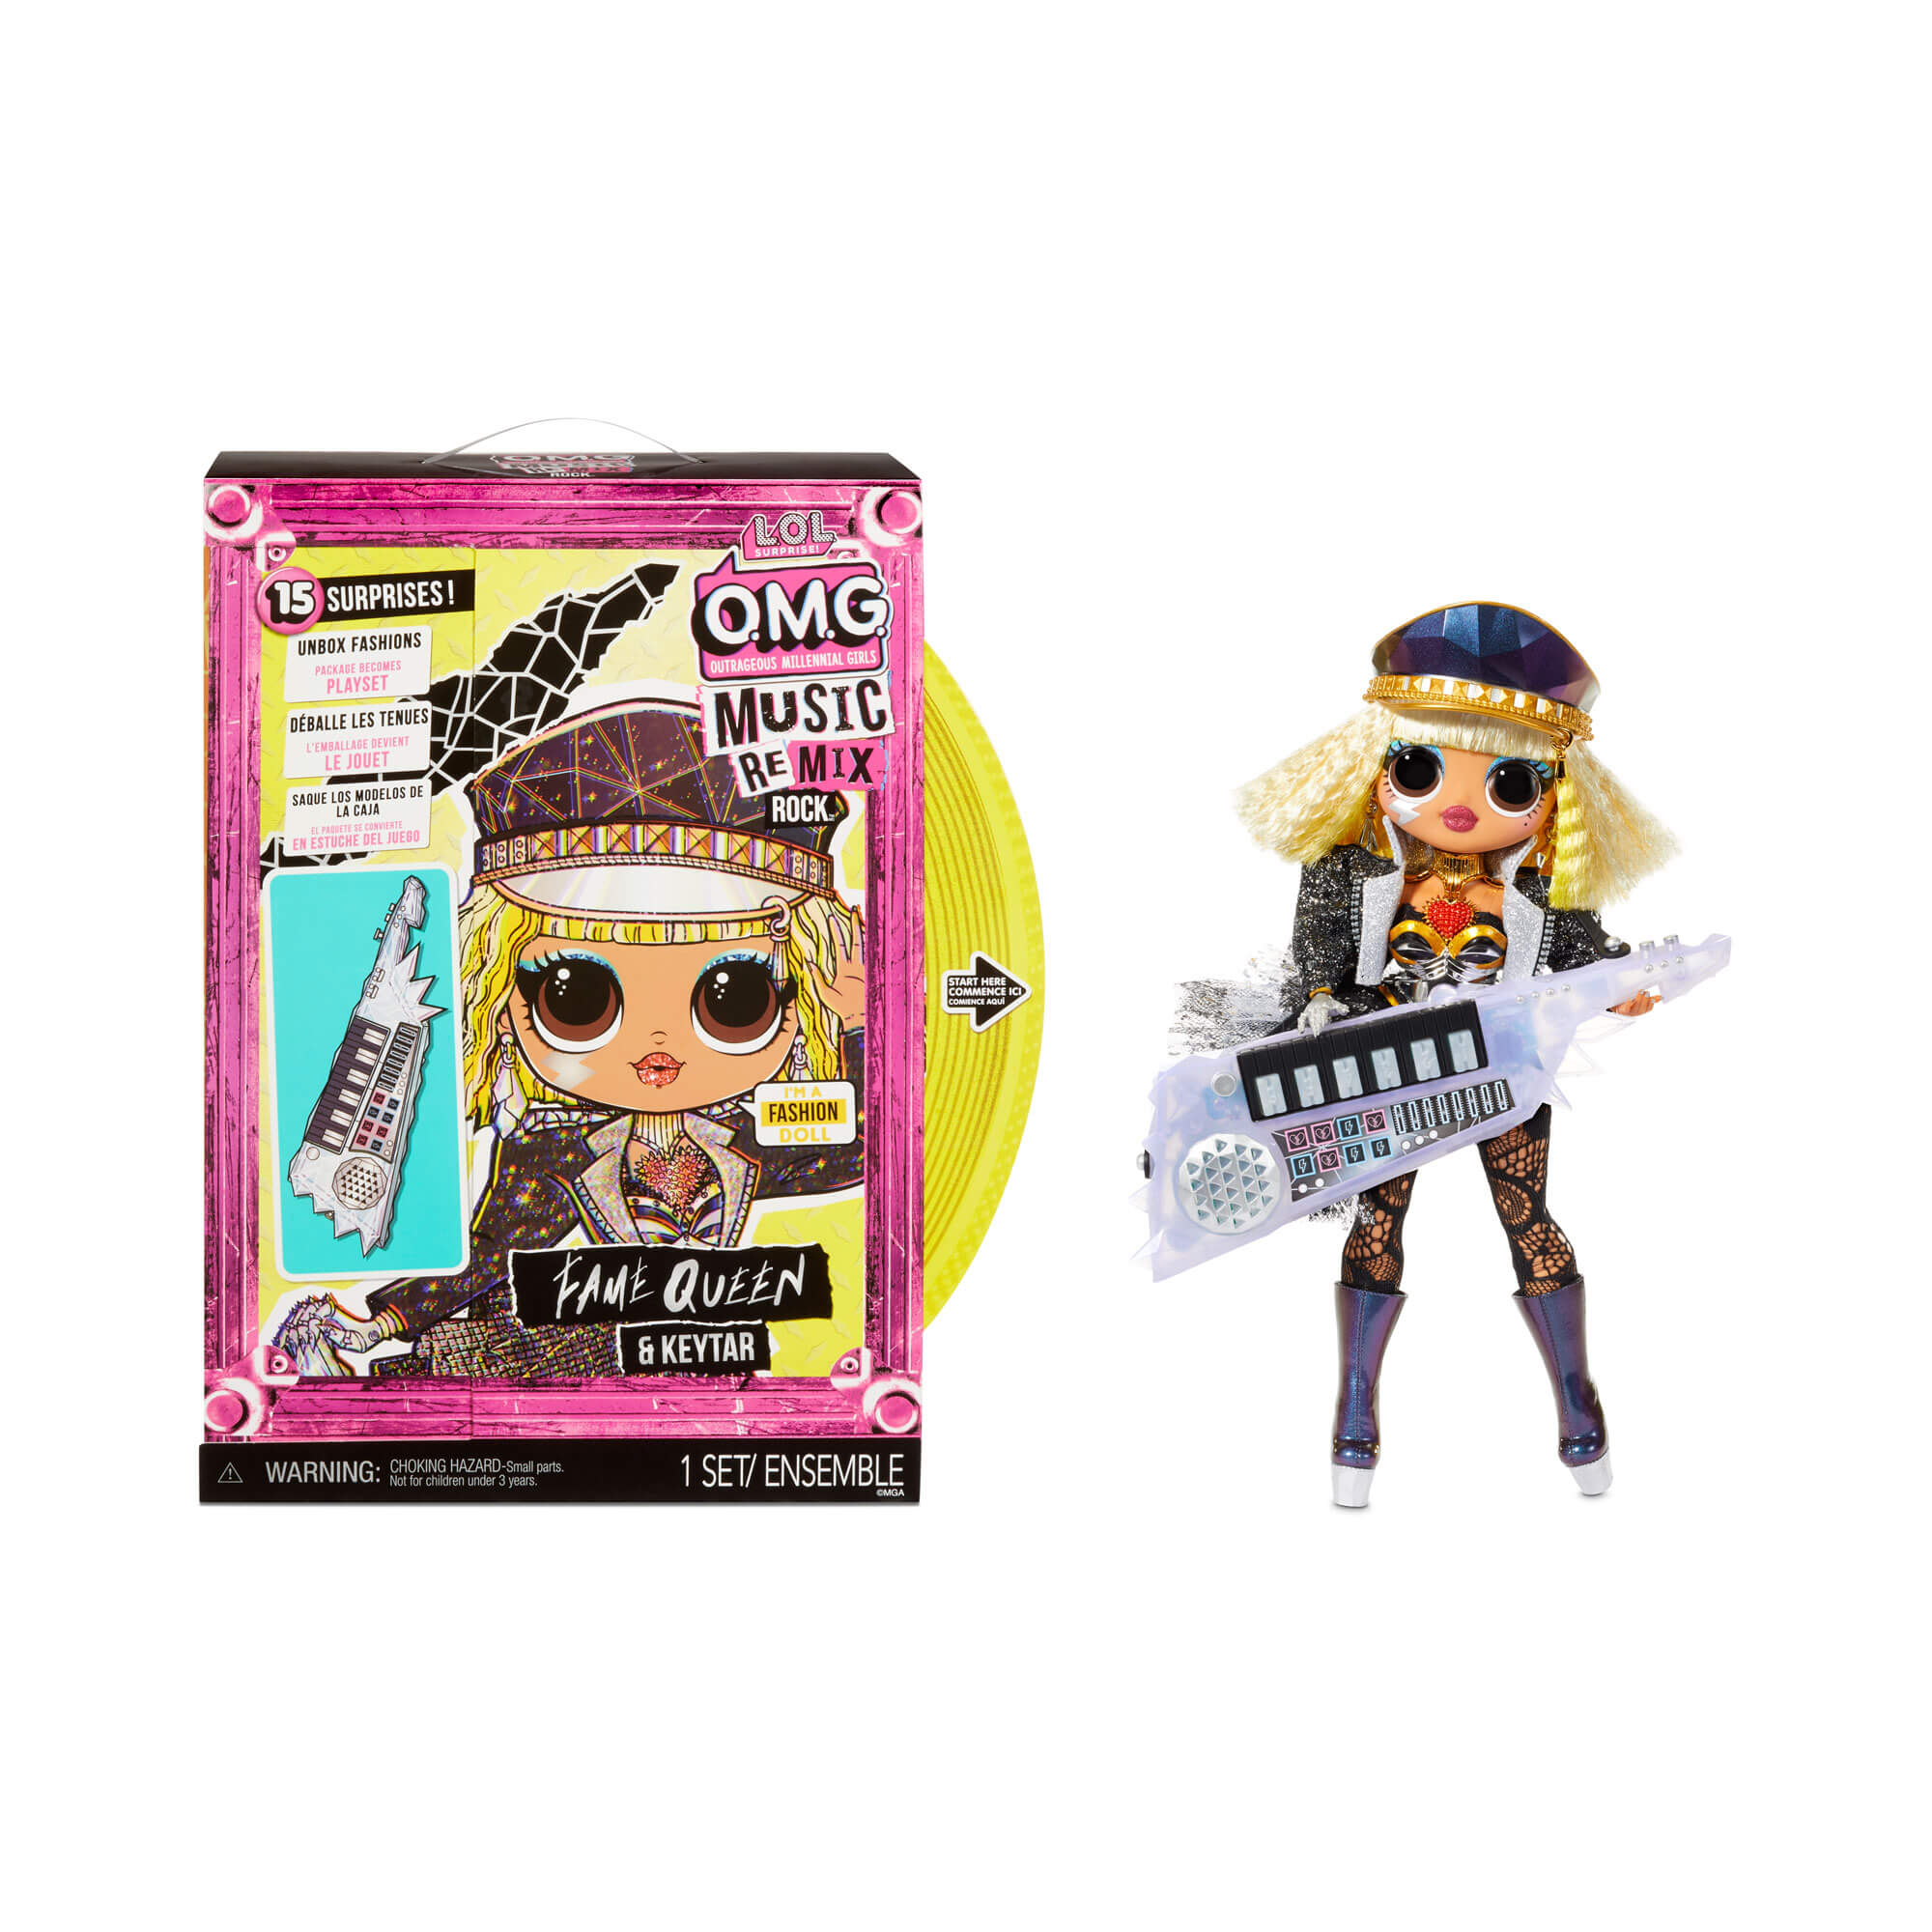 OMG Remix Rock Fame Queen Keytar 15 Surprises – The MGA Shop